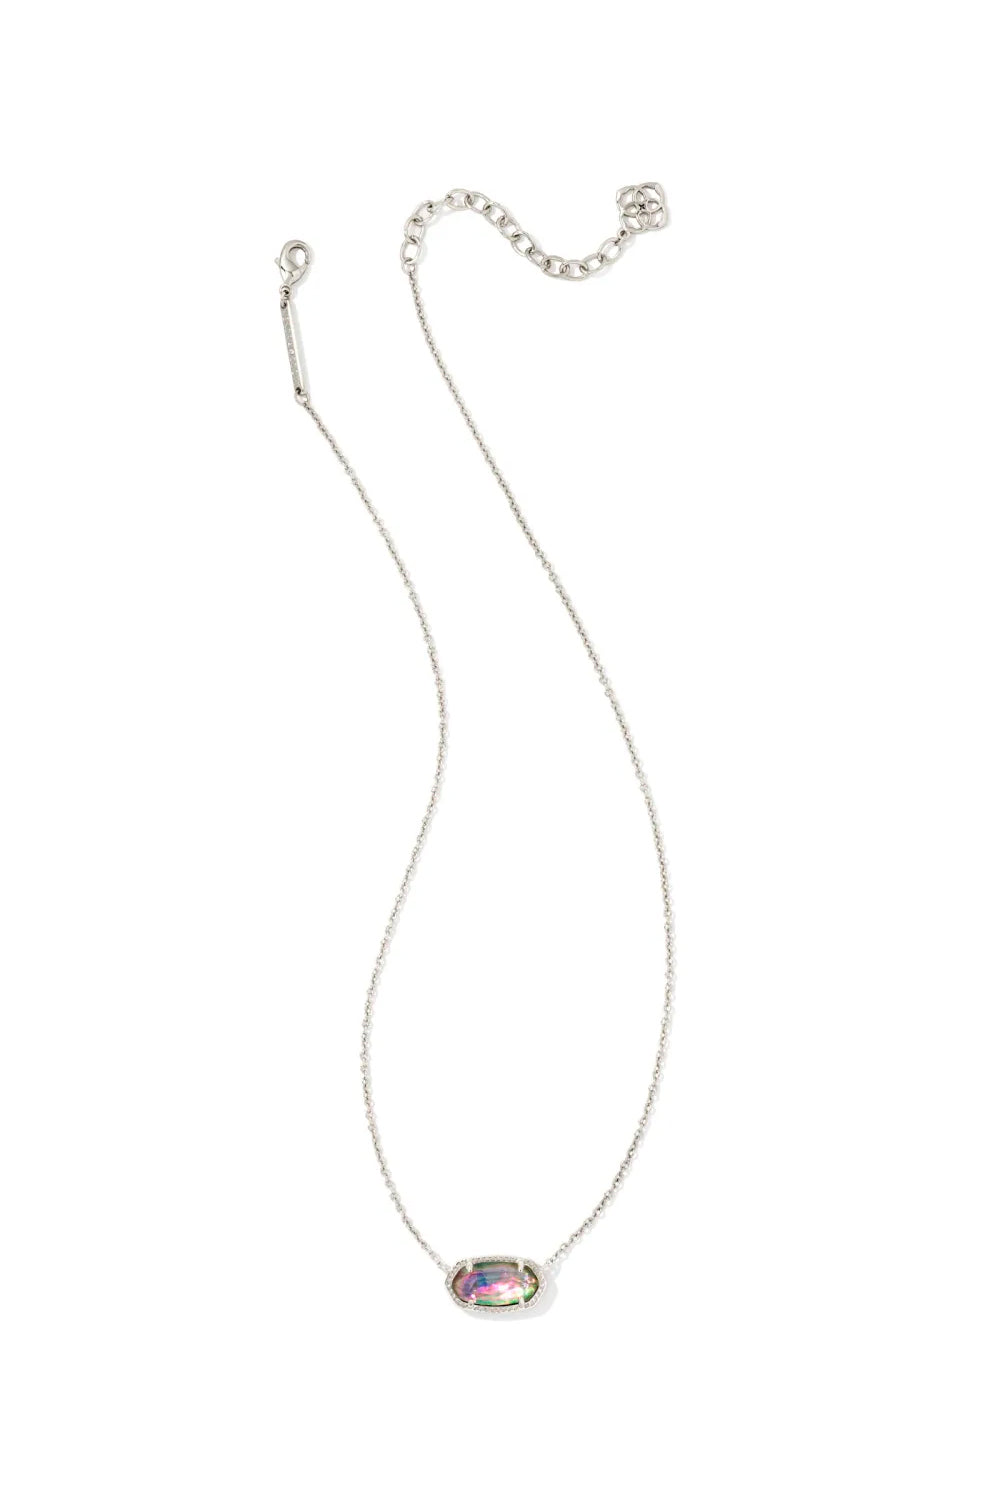 Kendra Scott: Elisa Silver Pendant Necklace - Lilac Abalone | Makk Fashions